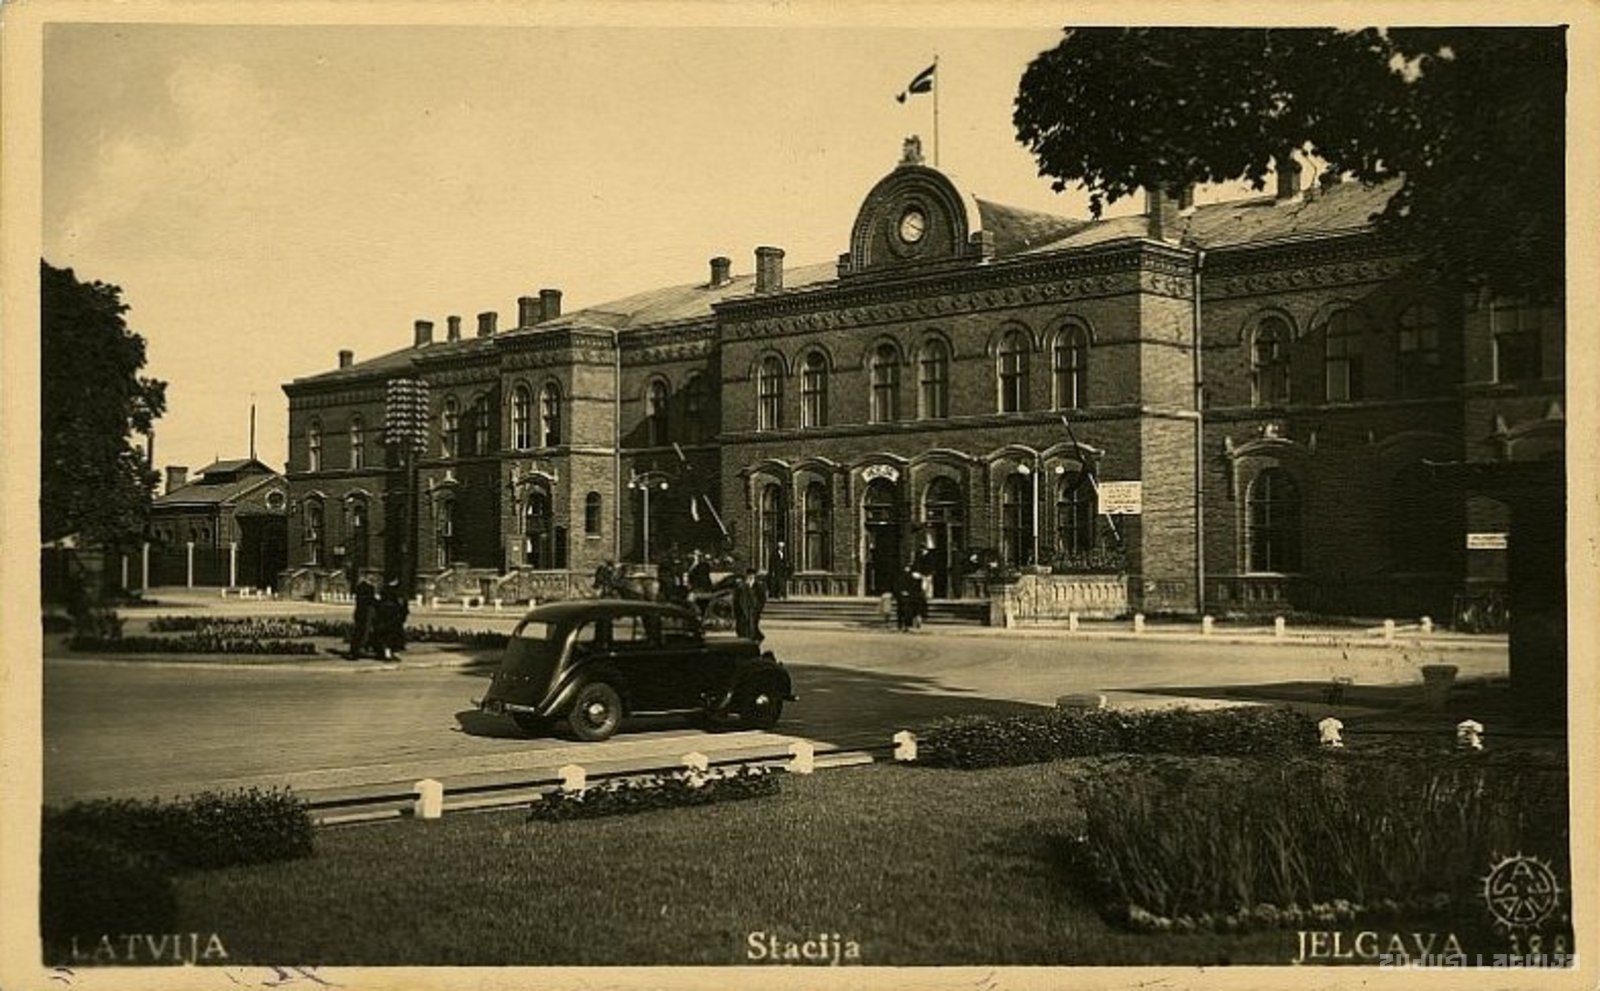 Jelgava Railway Station, Latvia. Station. Jelgava